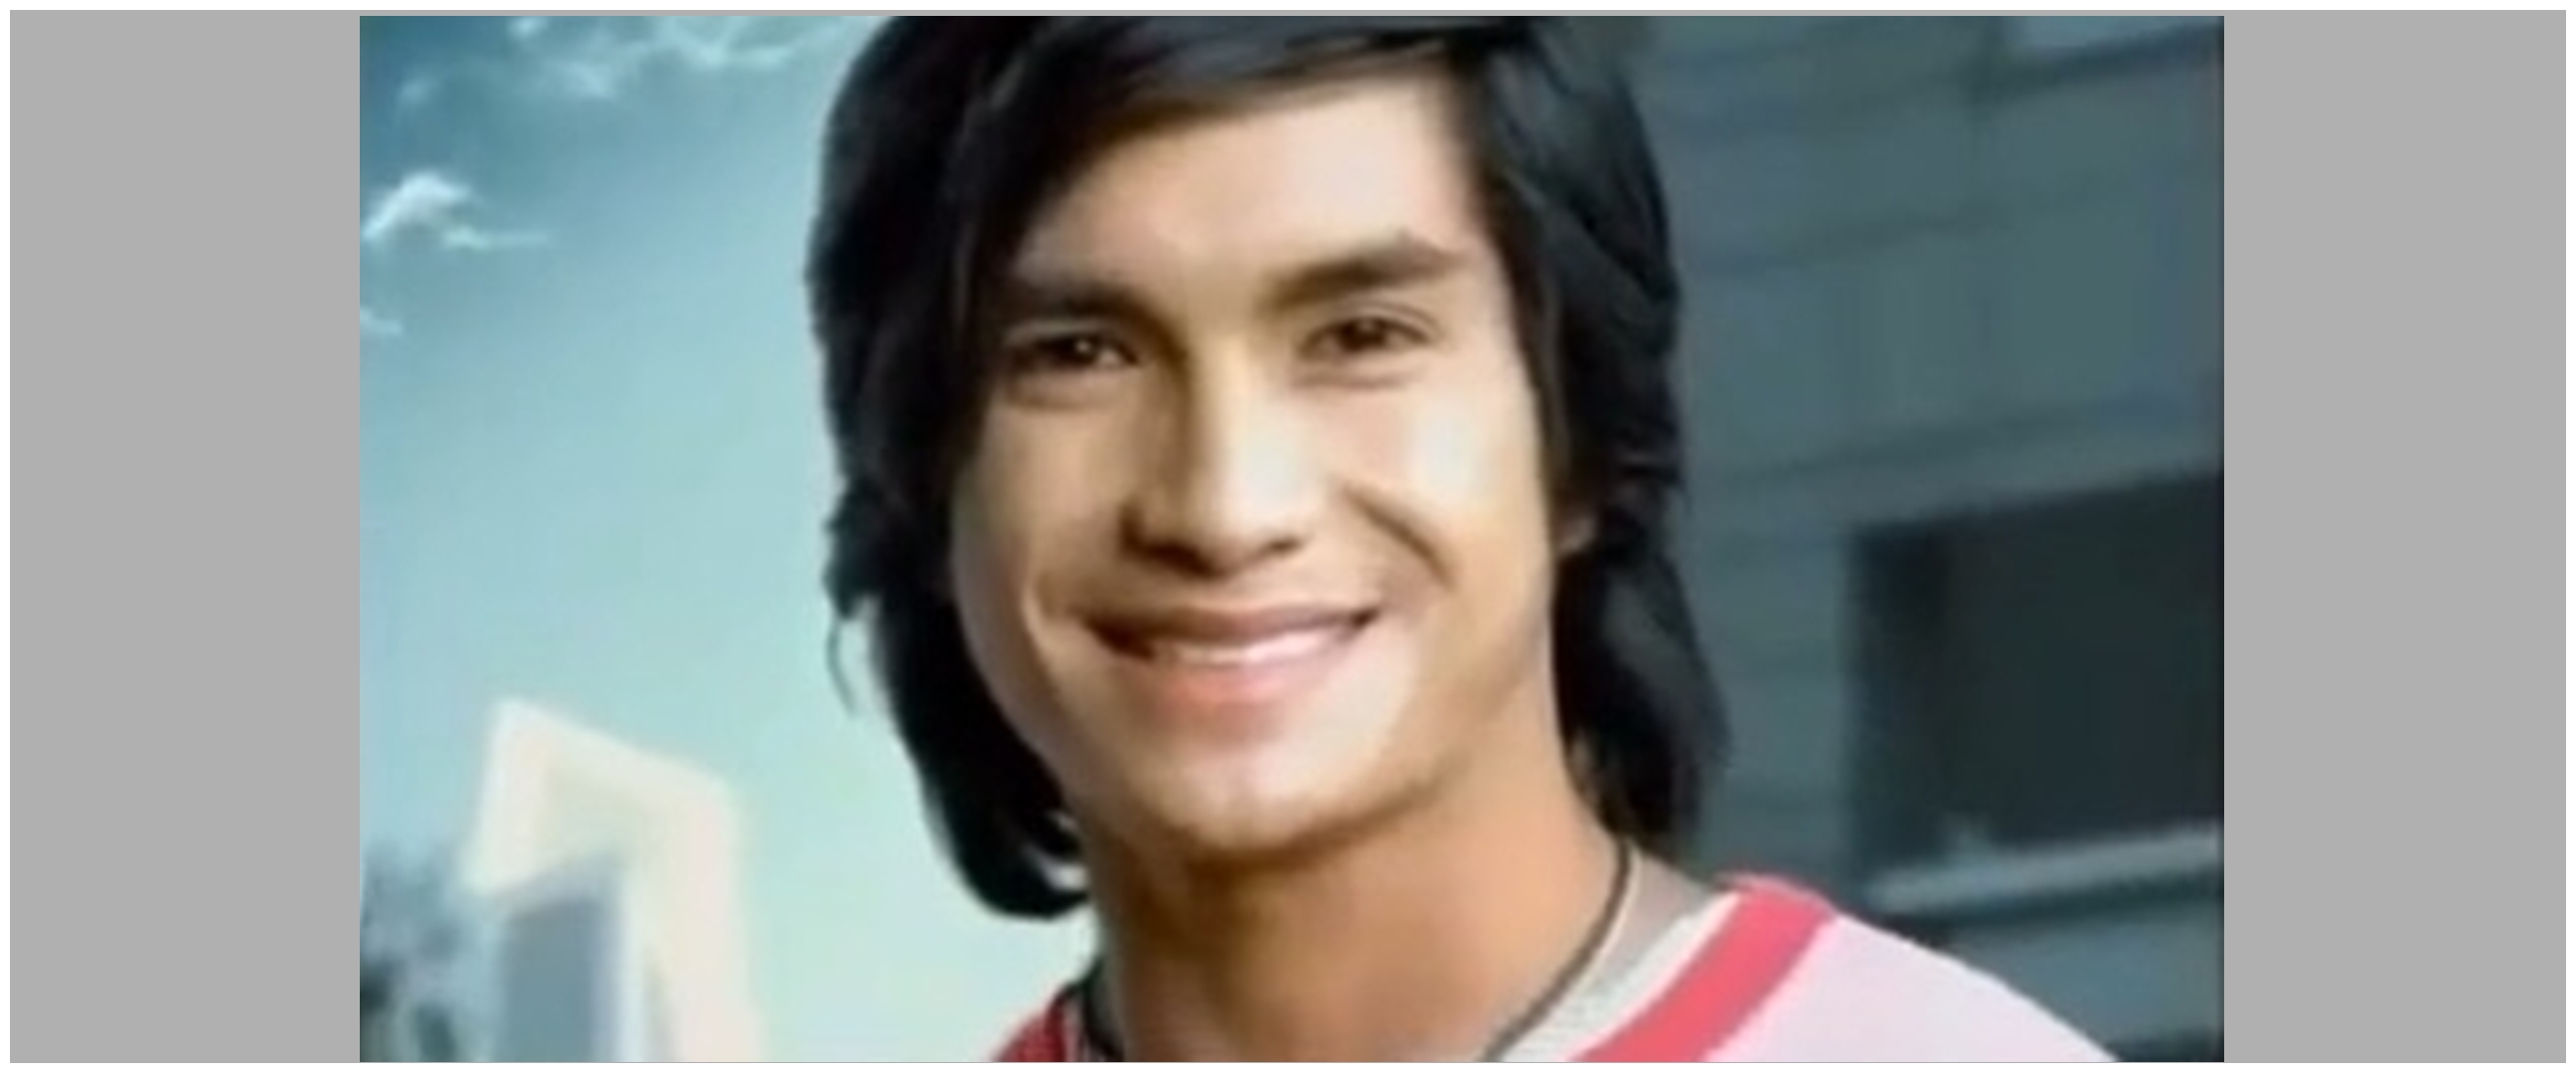 Bintang iklan pasta gigi ini eks pacar Tyas Mirasih kini aktor top Malaysia, ini 11 potret terbarunya